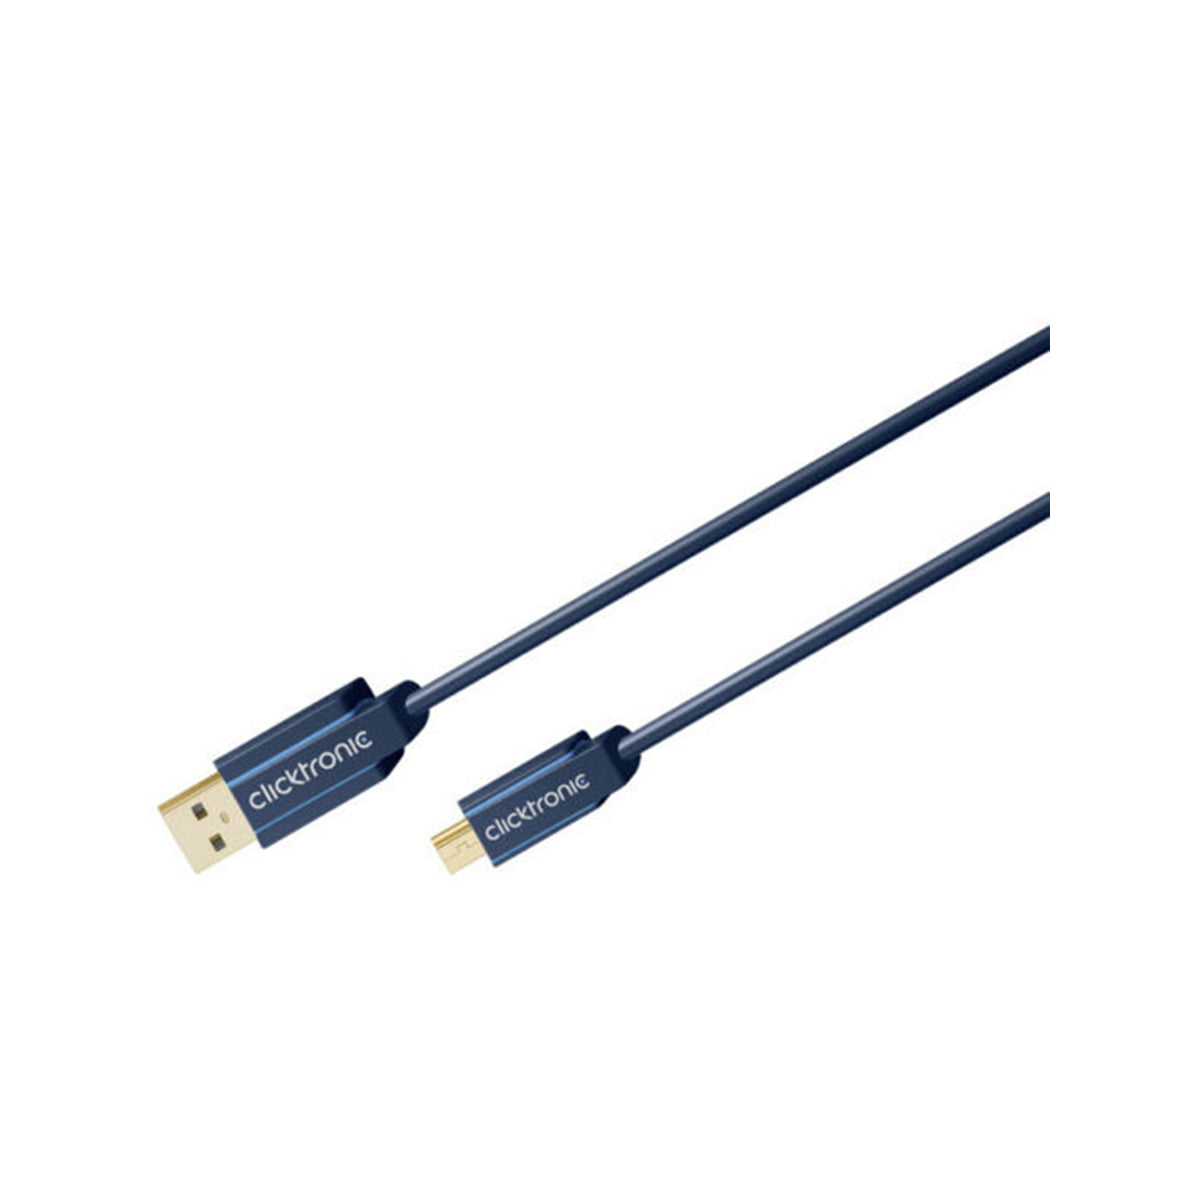 Clicktronic USB A 2.0 to USB MINI-B 5 Cable - 3m